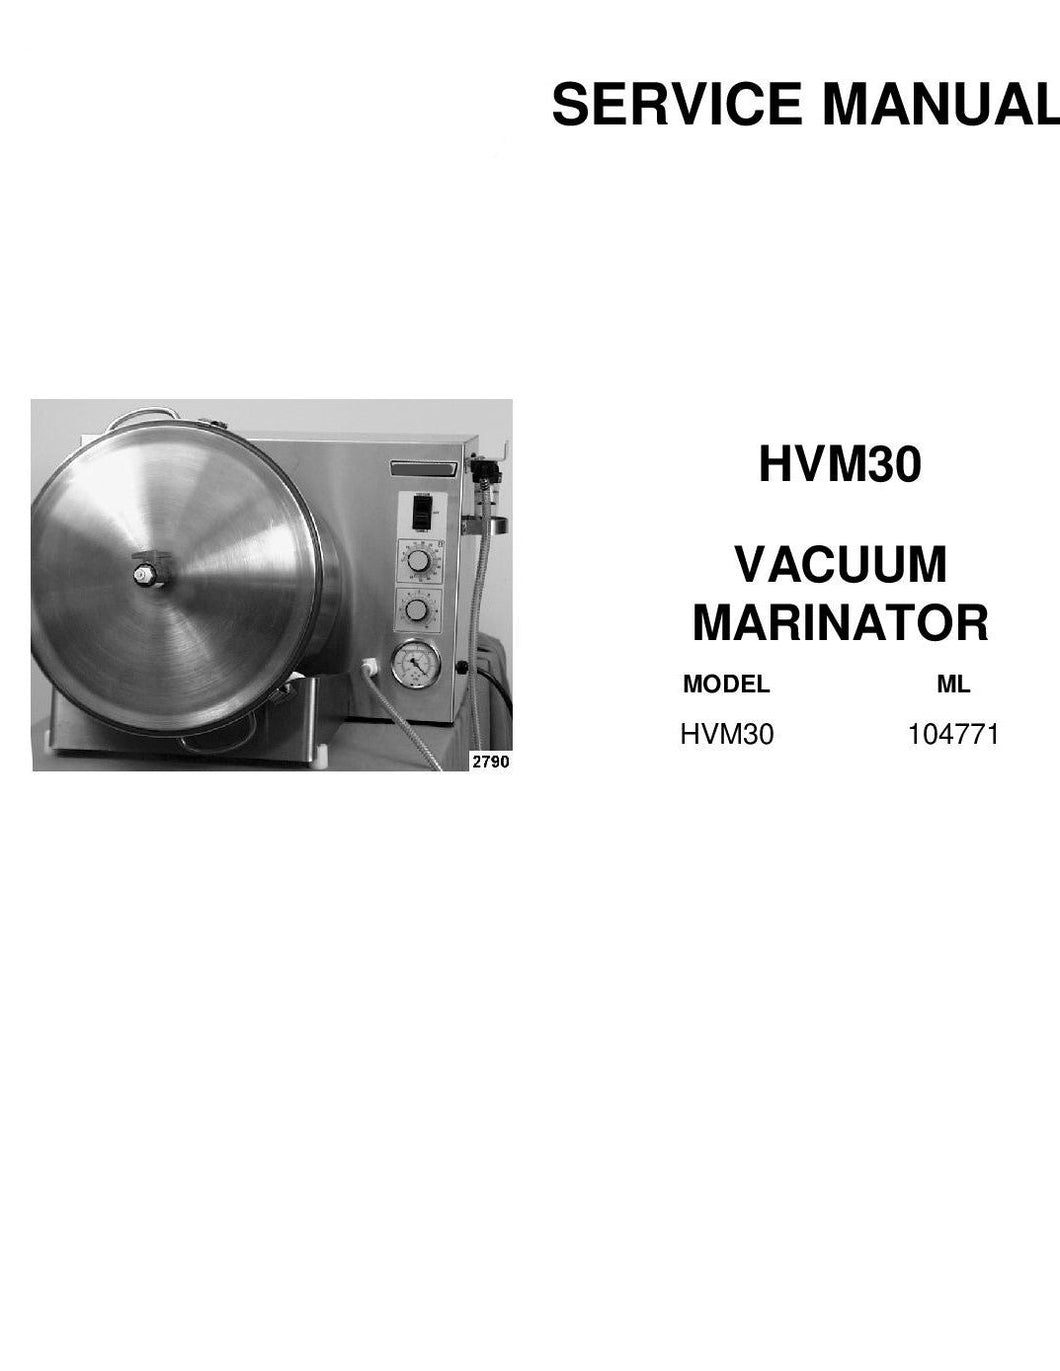 HOBART MODEL HVM30 VACUUM MARINATOR SERVICE, TECHNICAL AND REPAIR MANUALS PDF